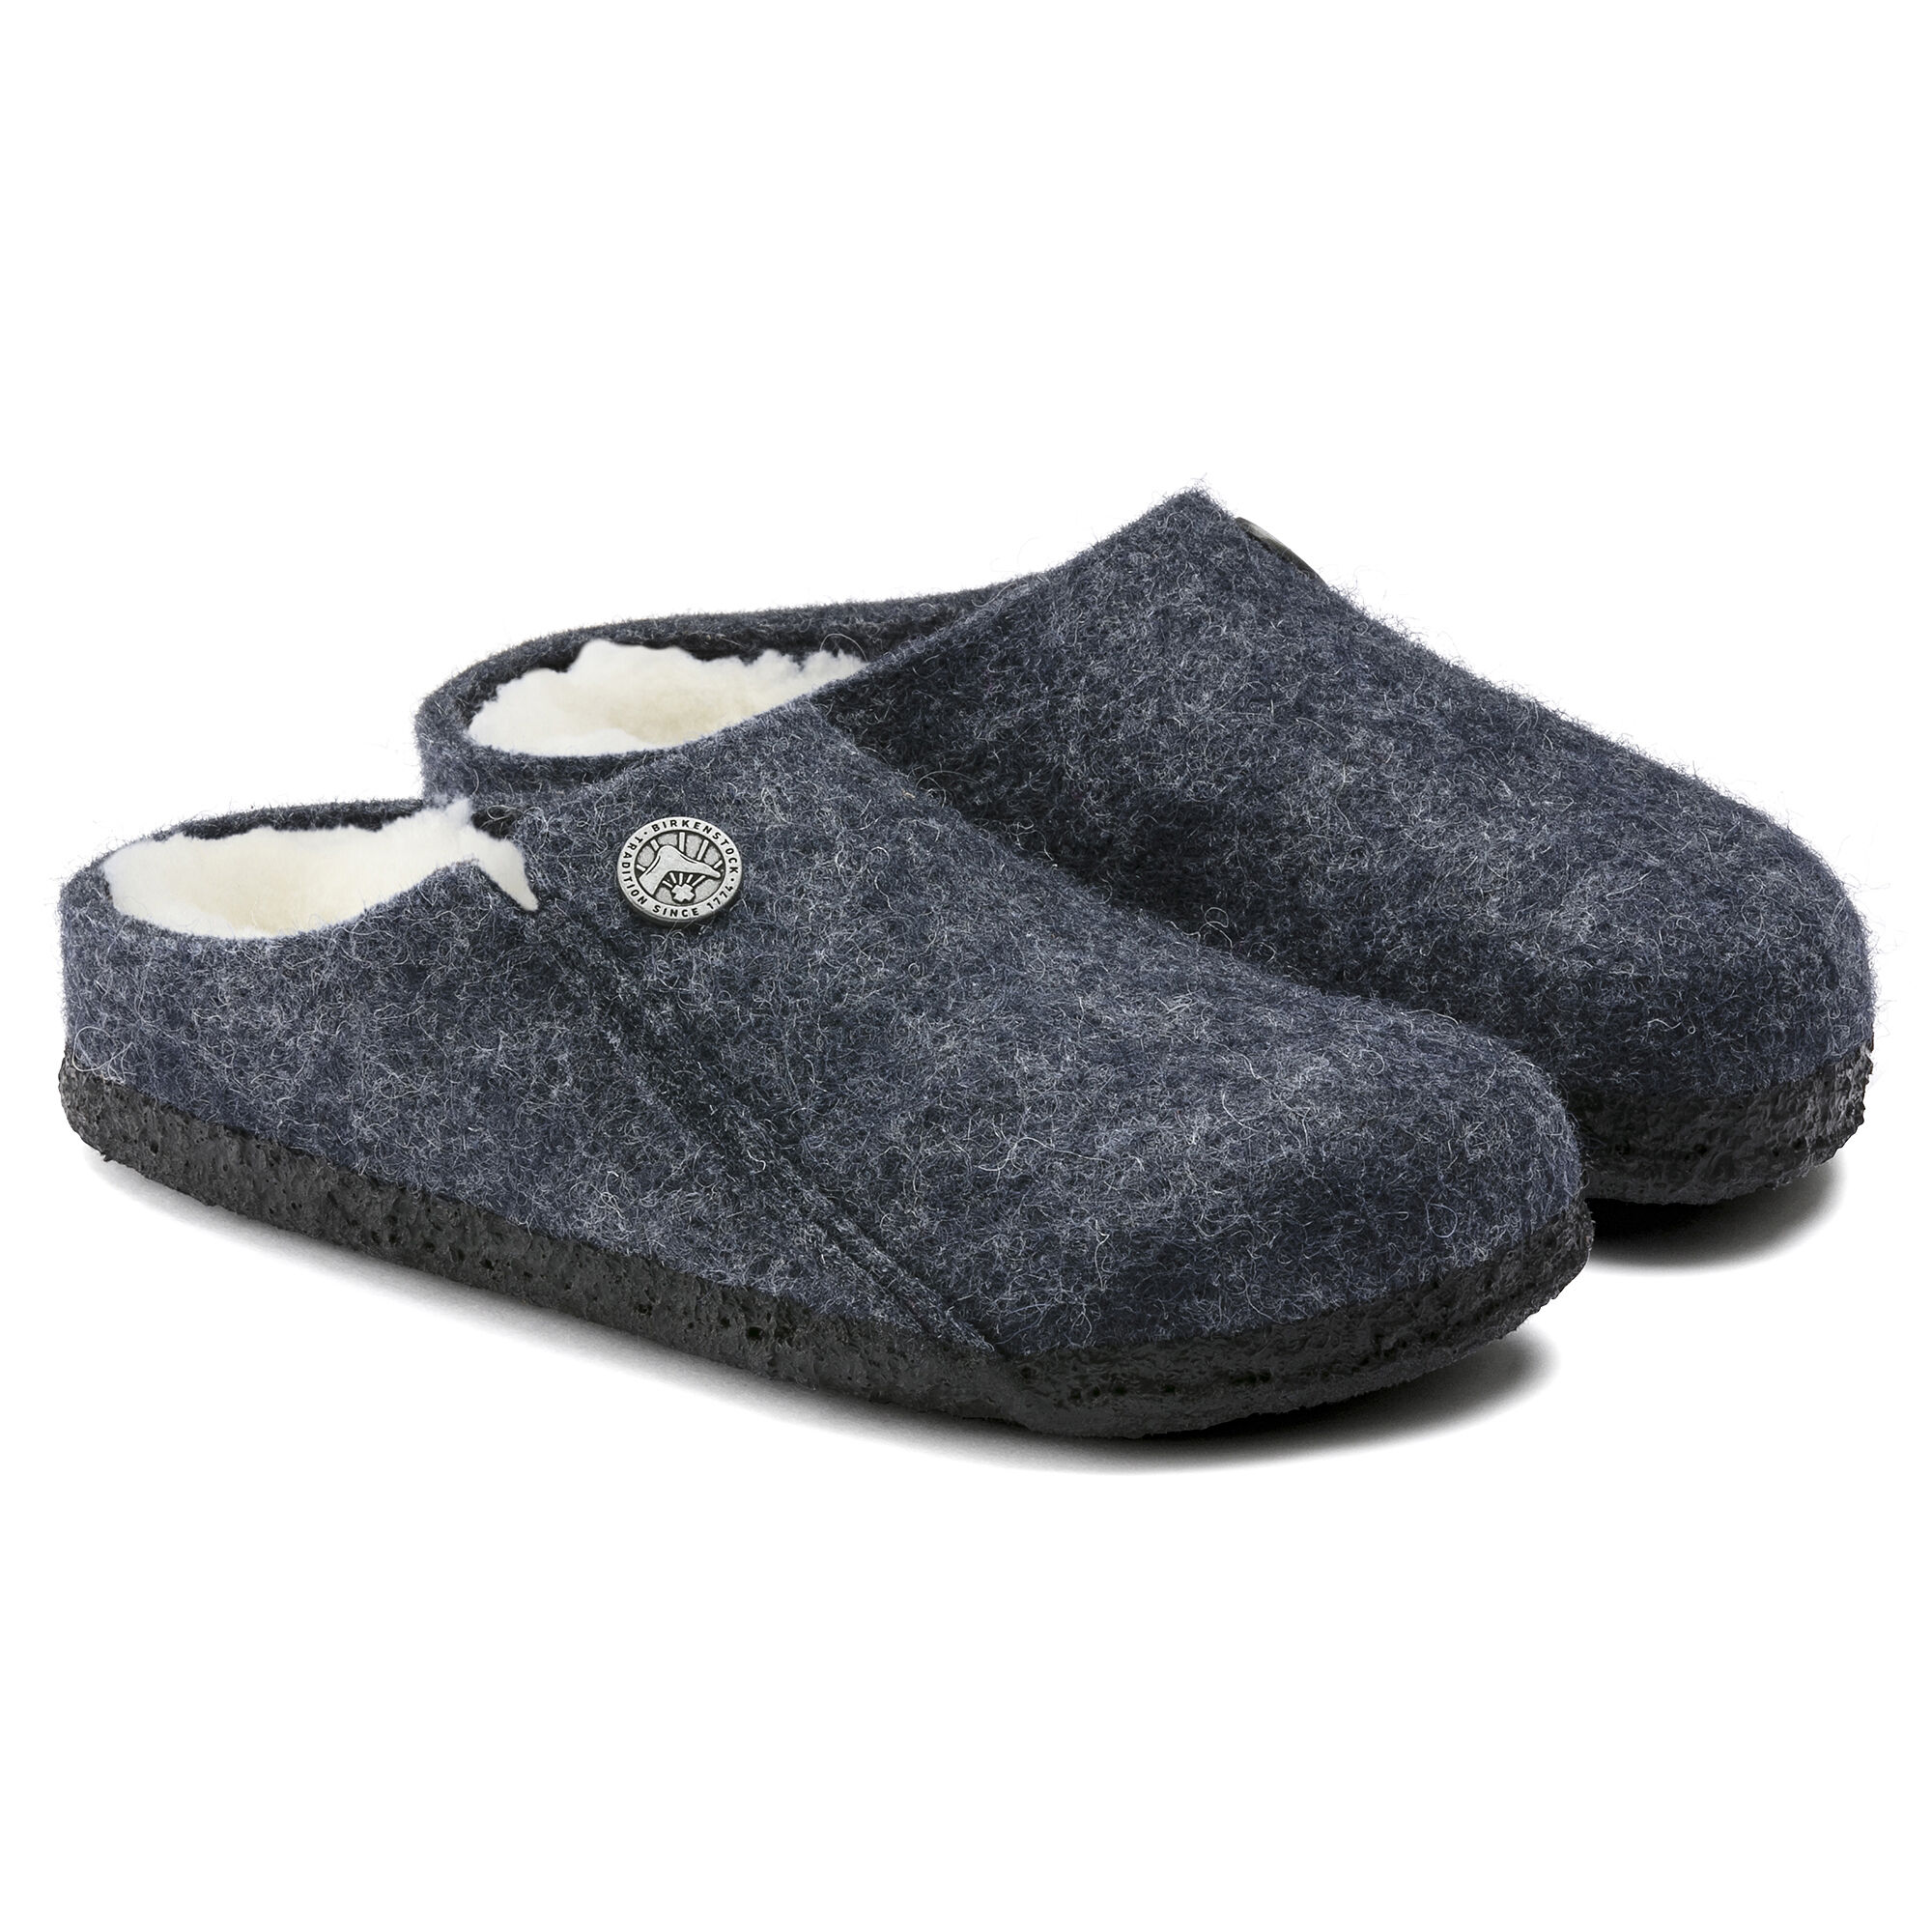 dearfoam scuff slippers